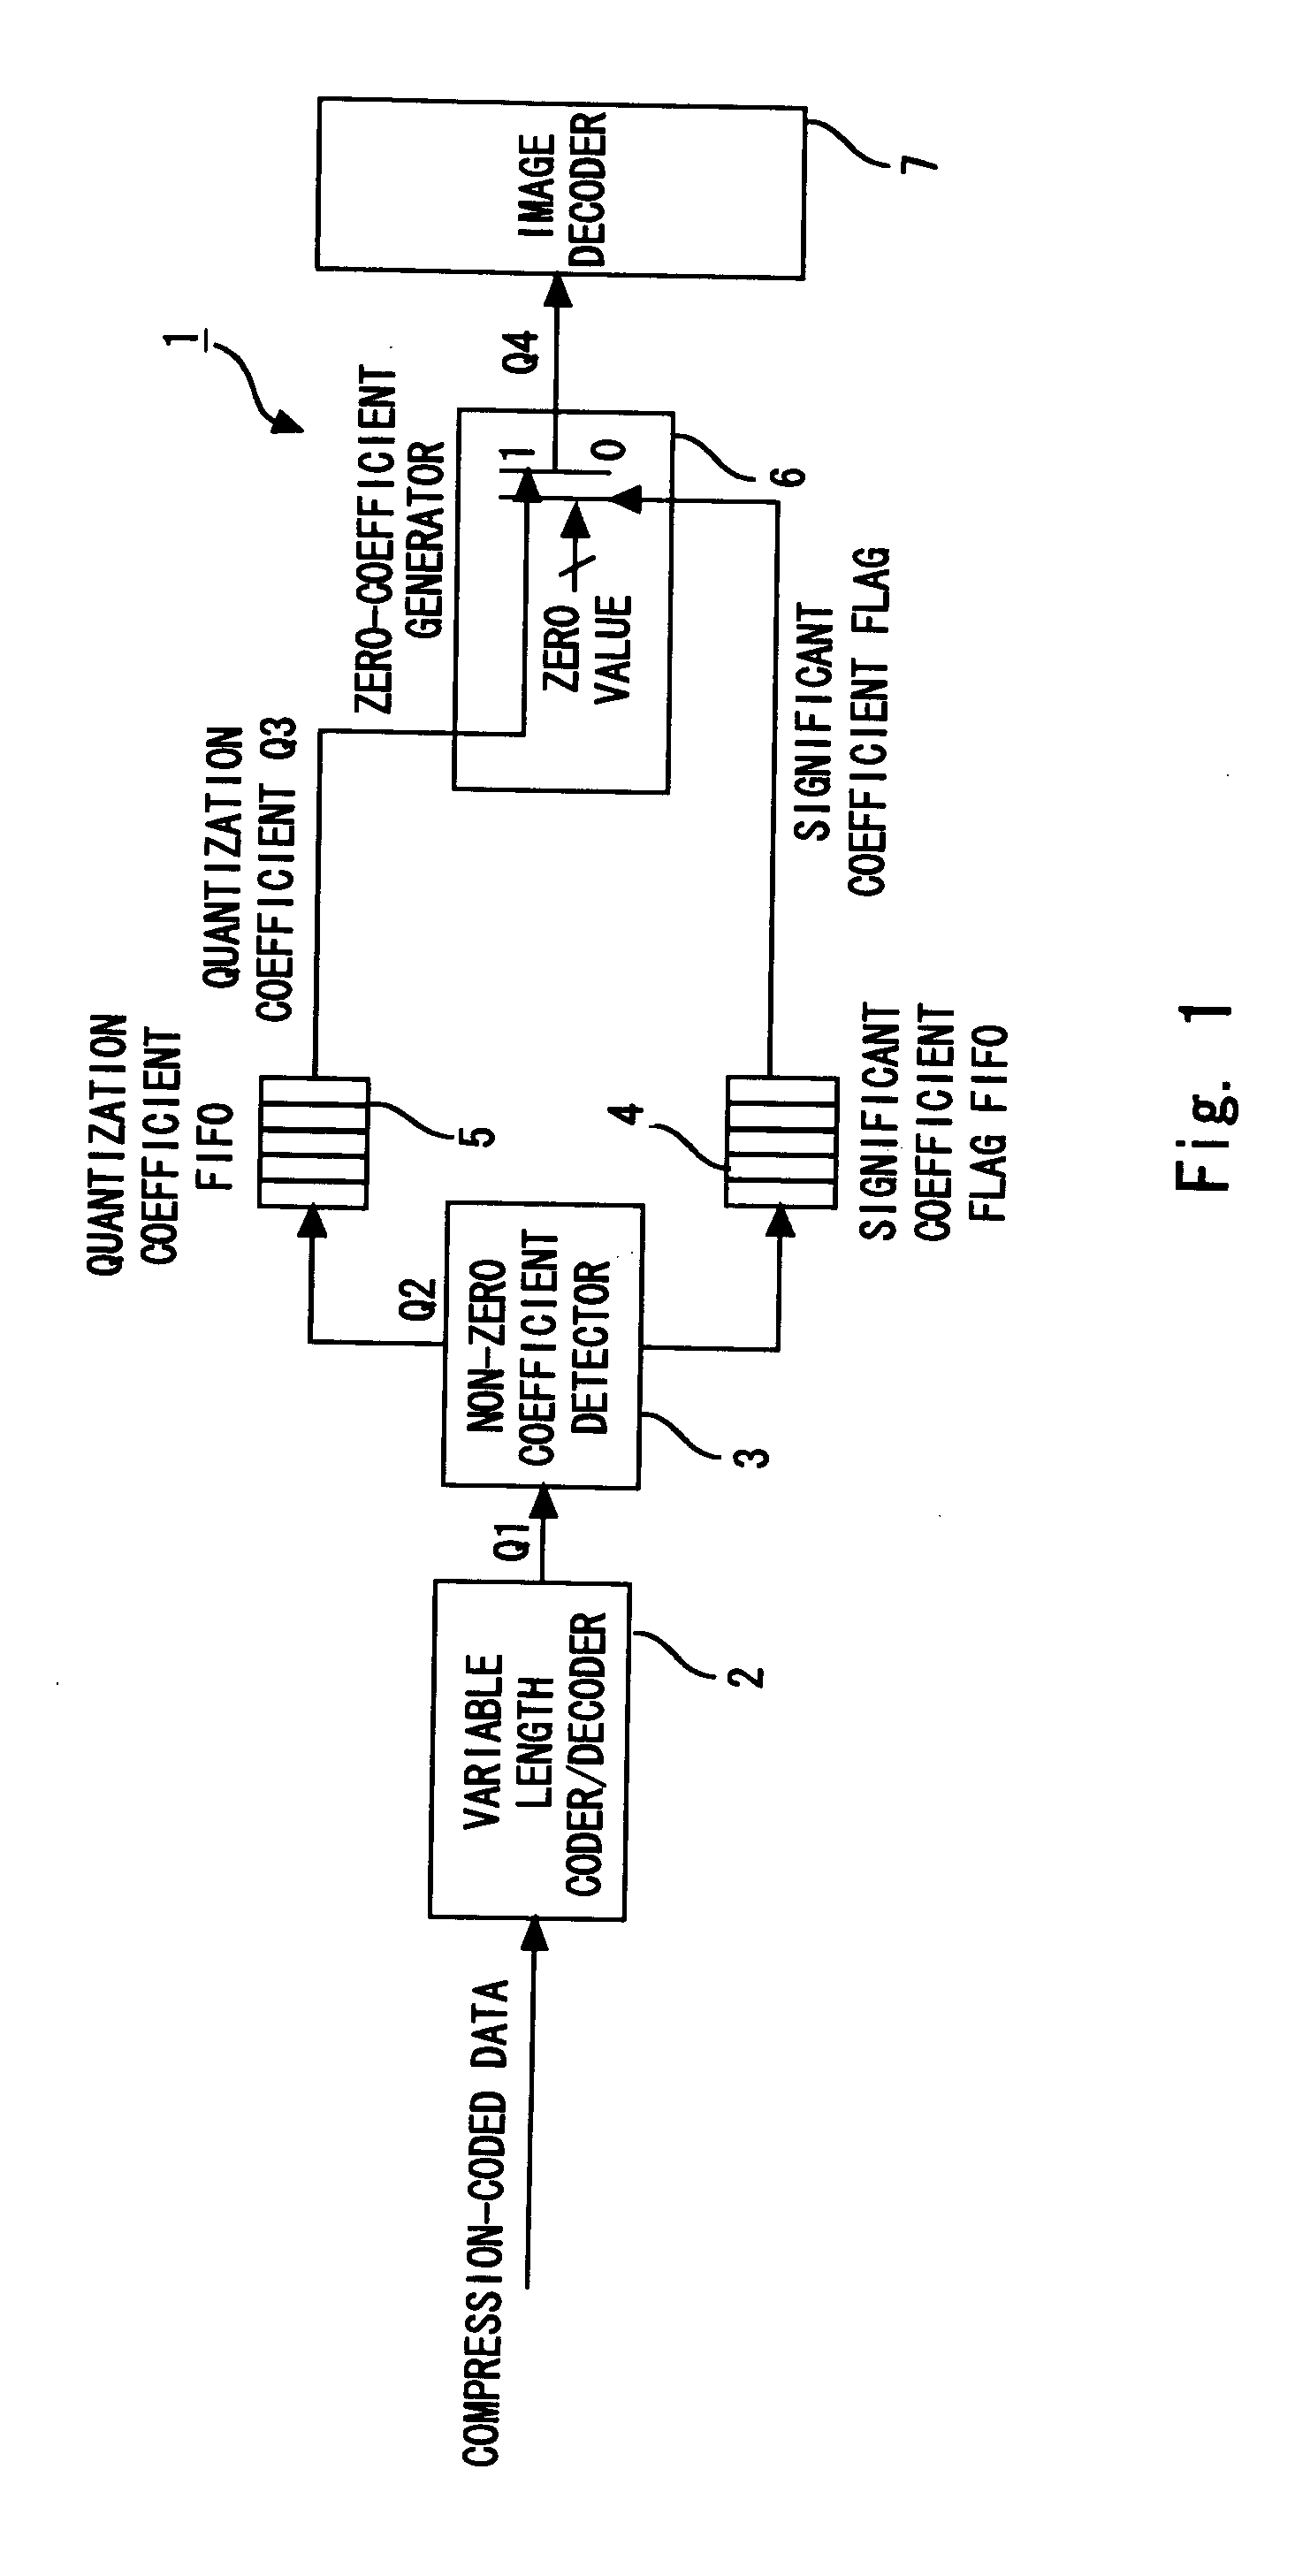 Image data decoding apparatus and method